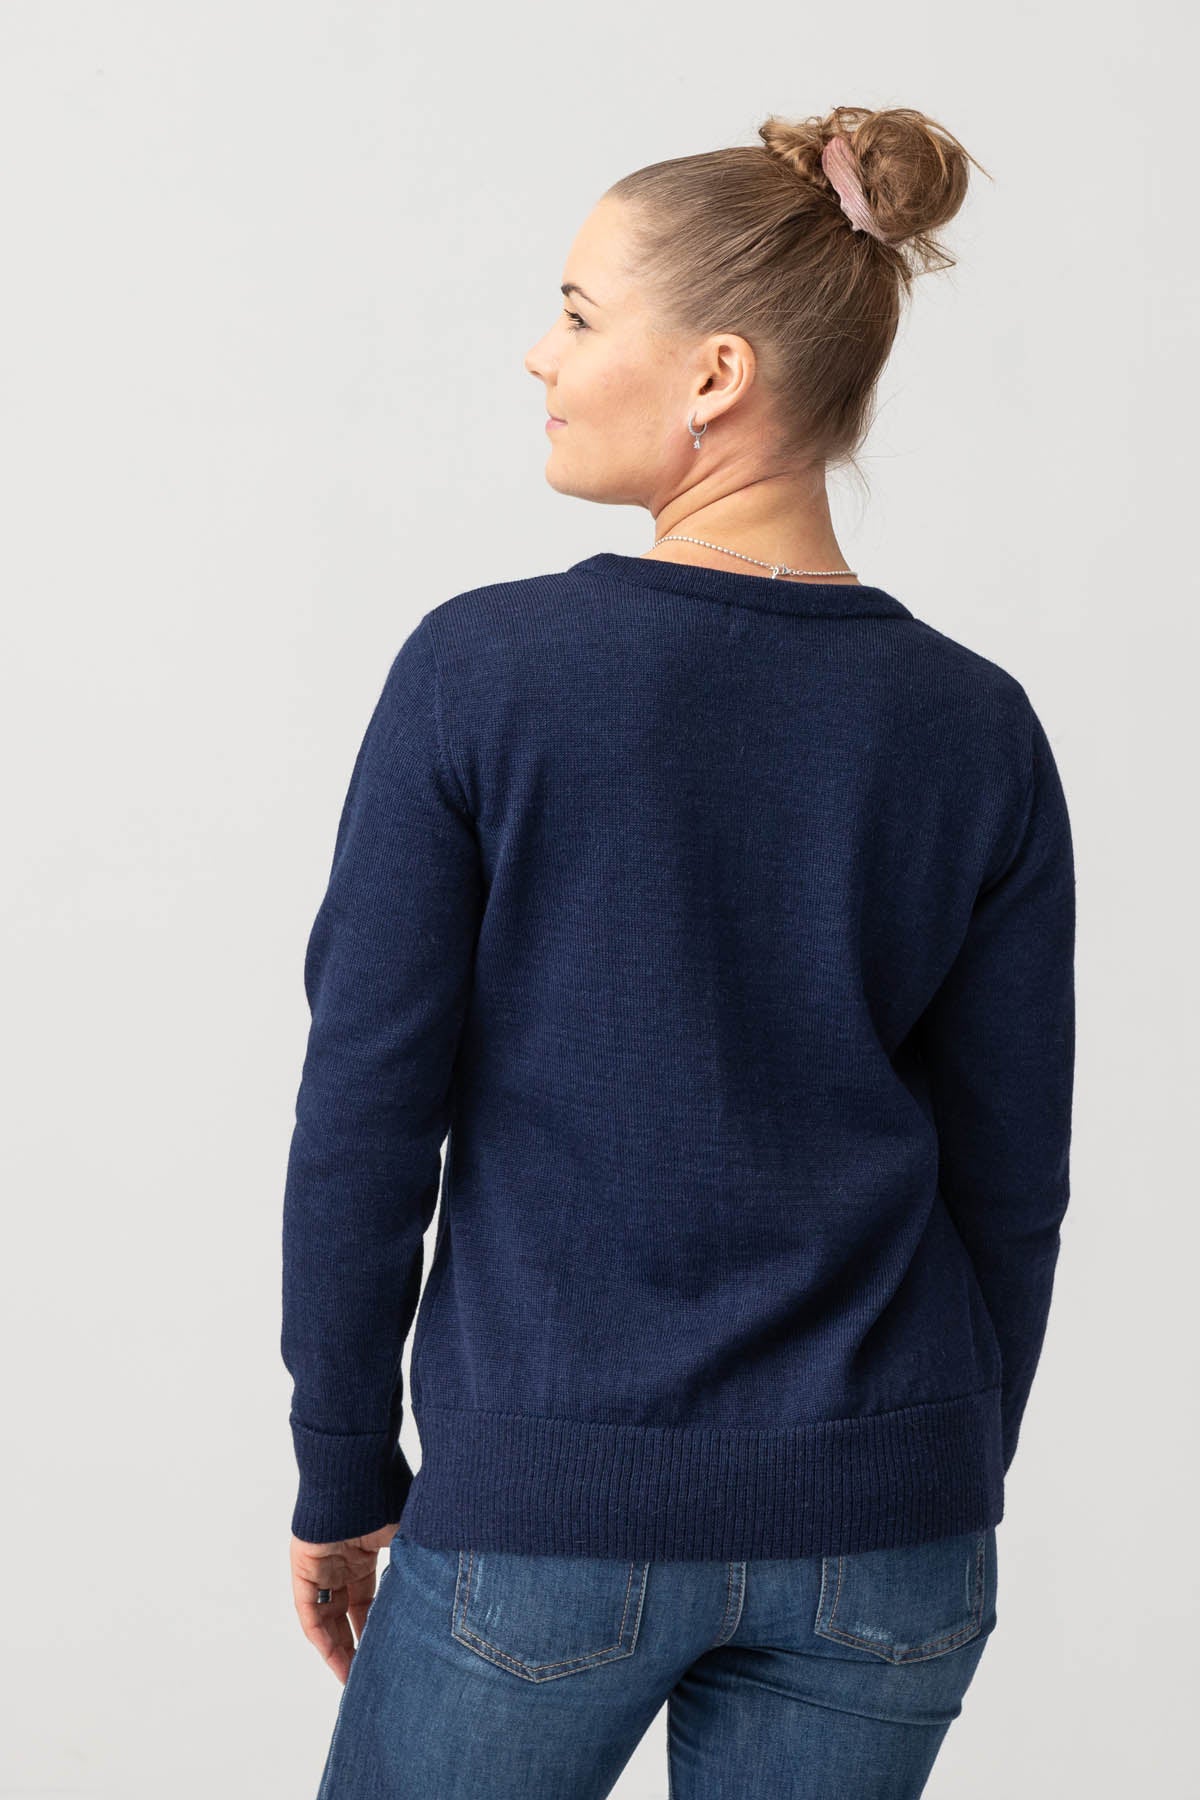 Ollanta sweater - dark blue